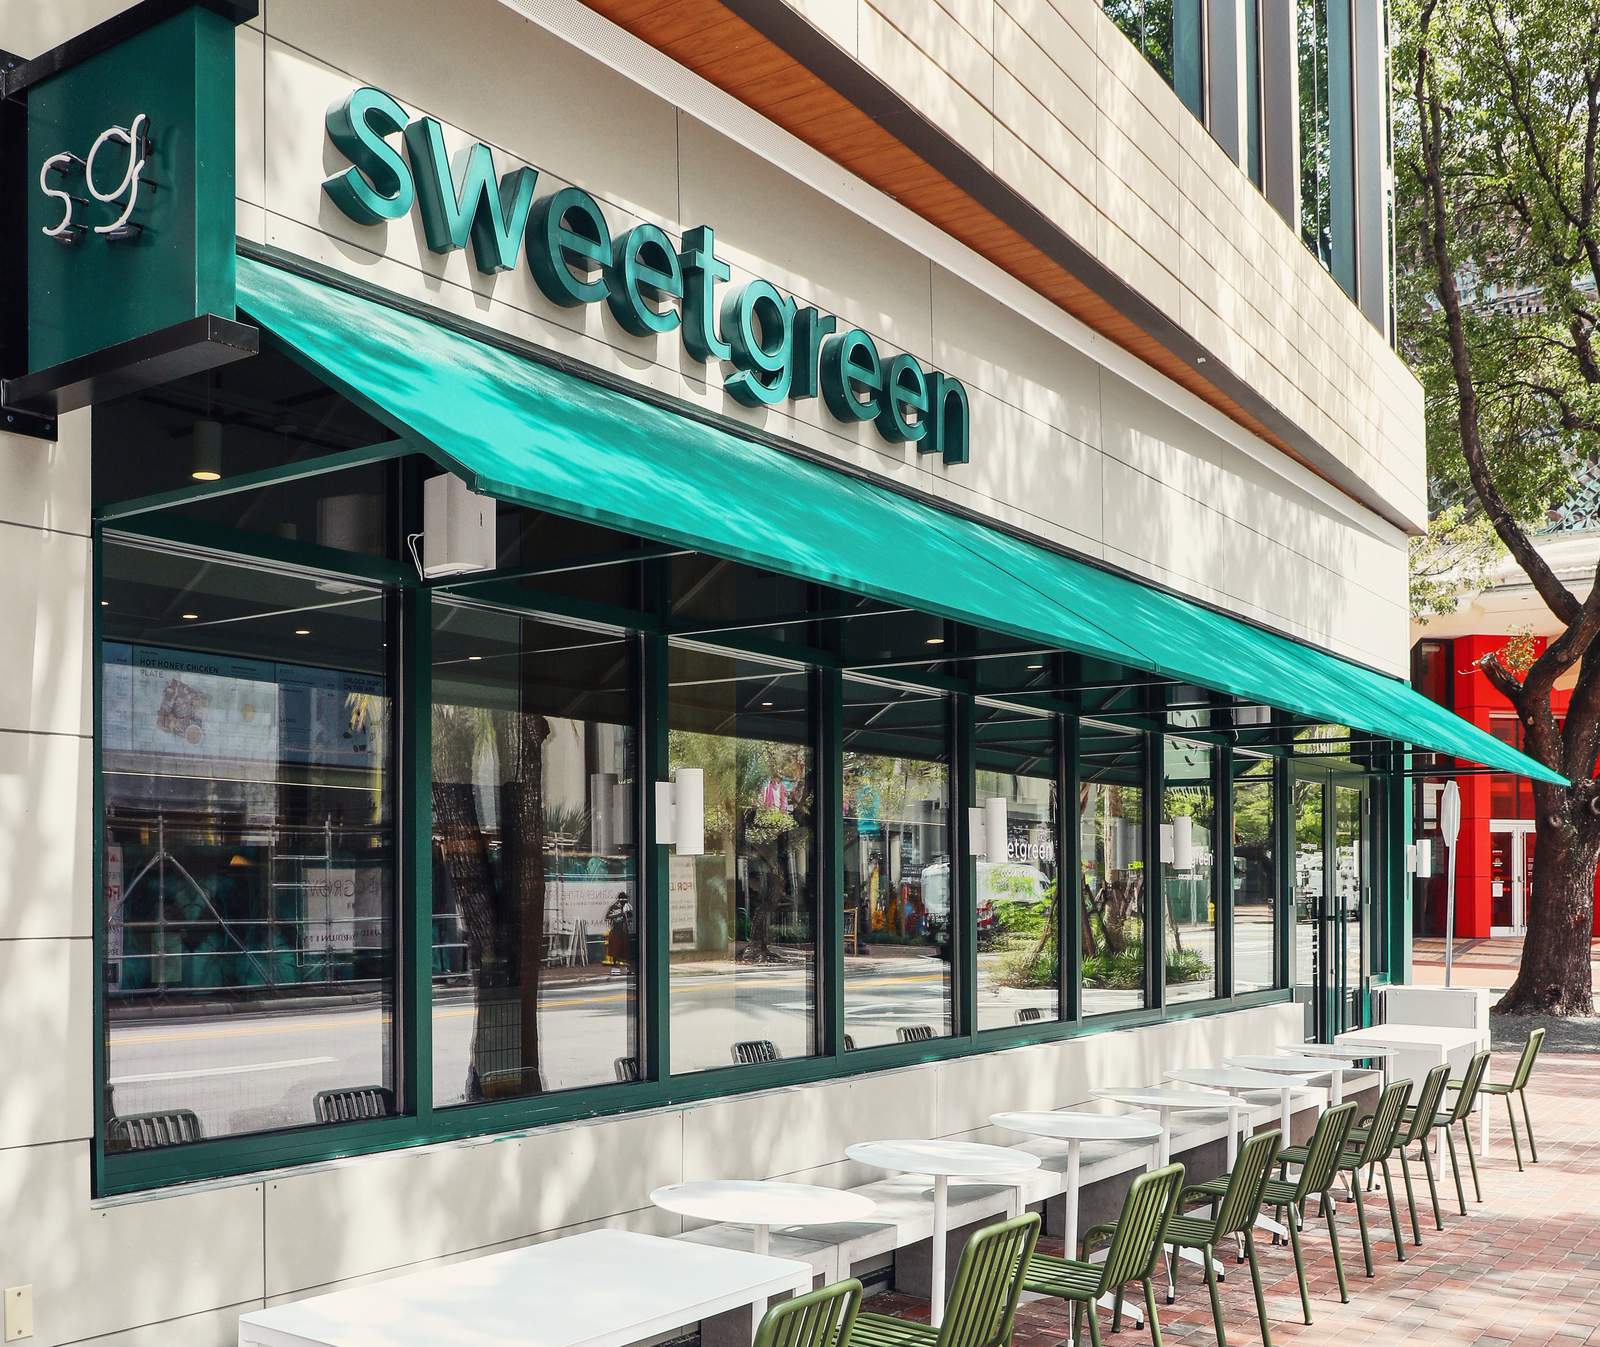 Trendy custom salad shop Sweetgreen opens second Miami location in CocoWalk